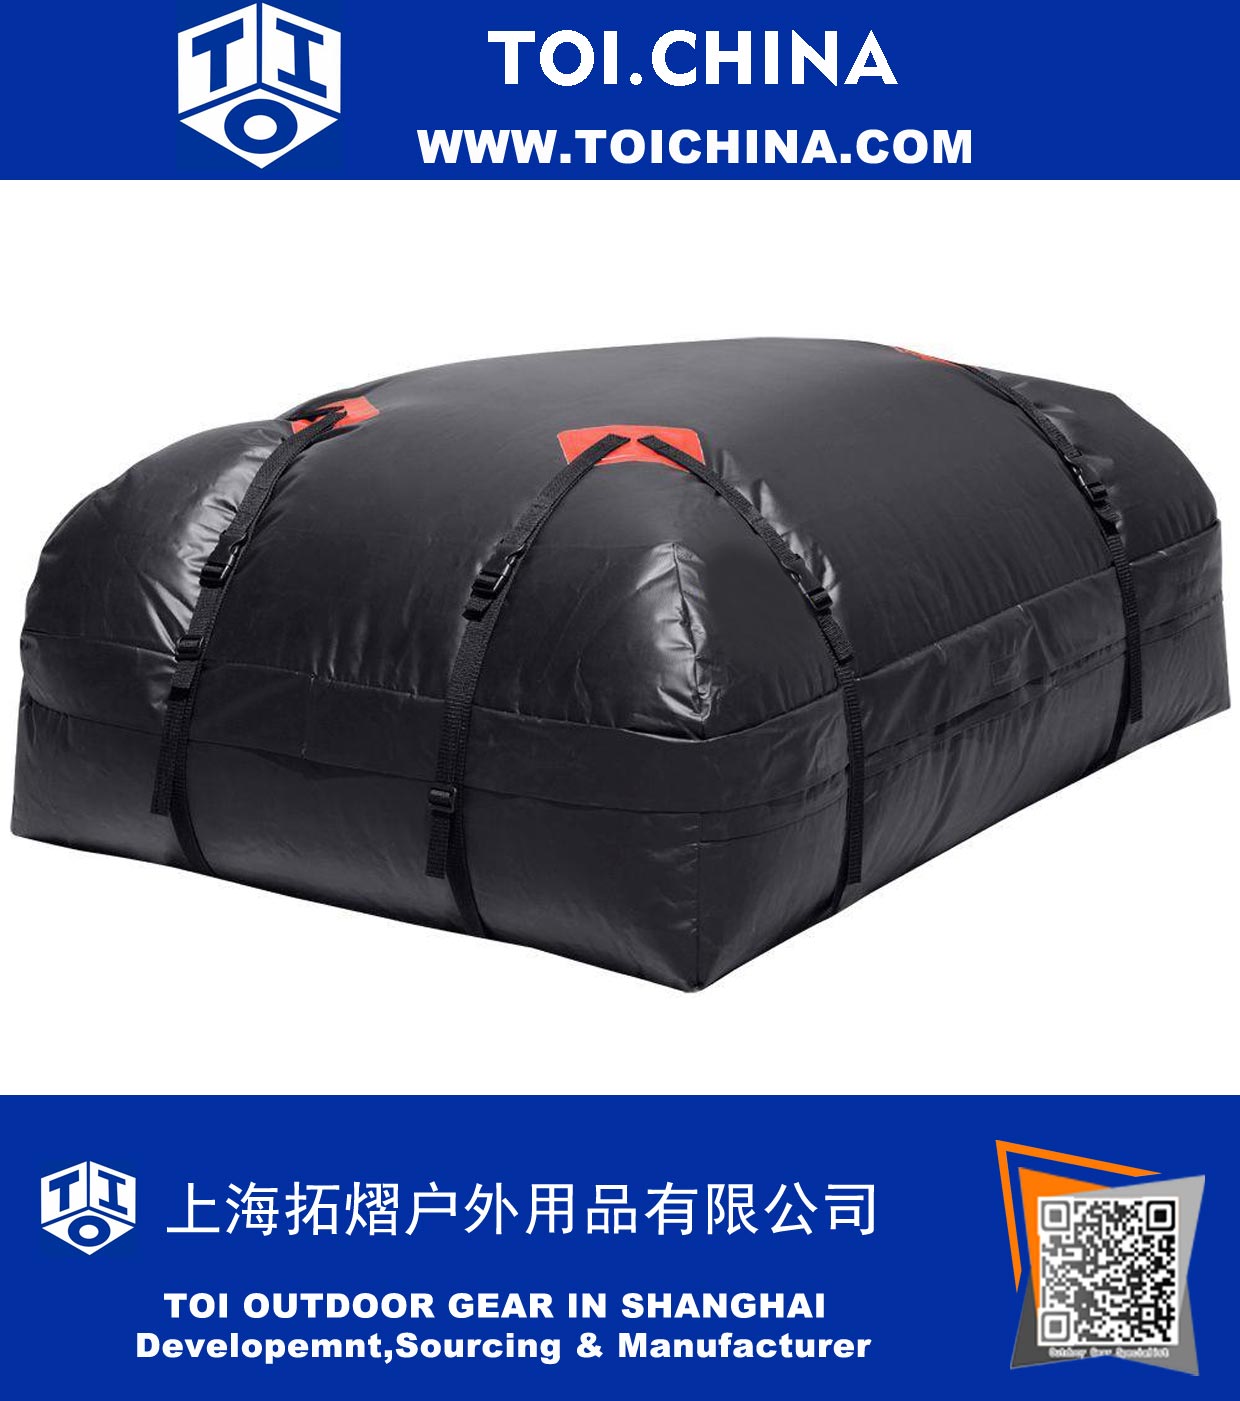 Telhado Waterproof Top Carga Bag